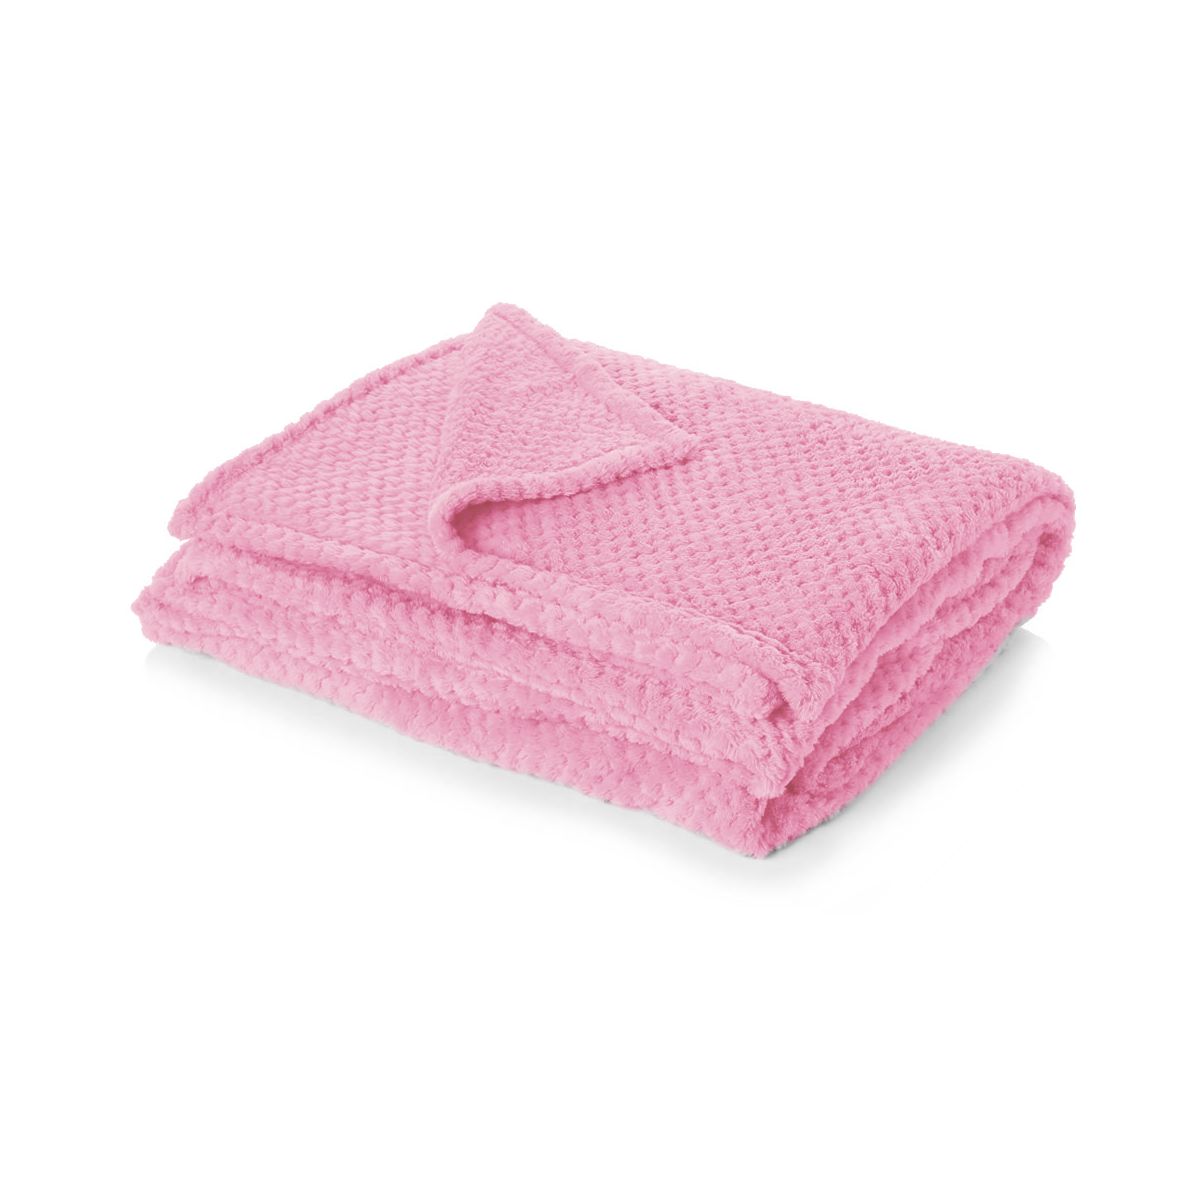 Luxury Waffle Honeycomb Warm Throw Over Sofa Bed Soft Blanket 150 x 200cm Pink